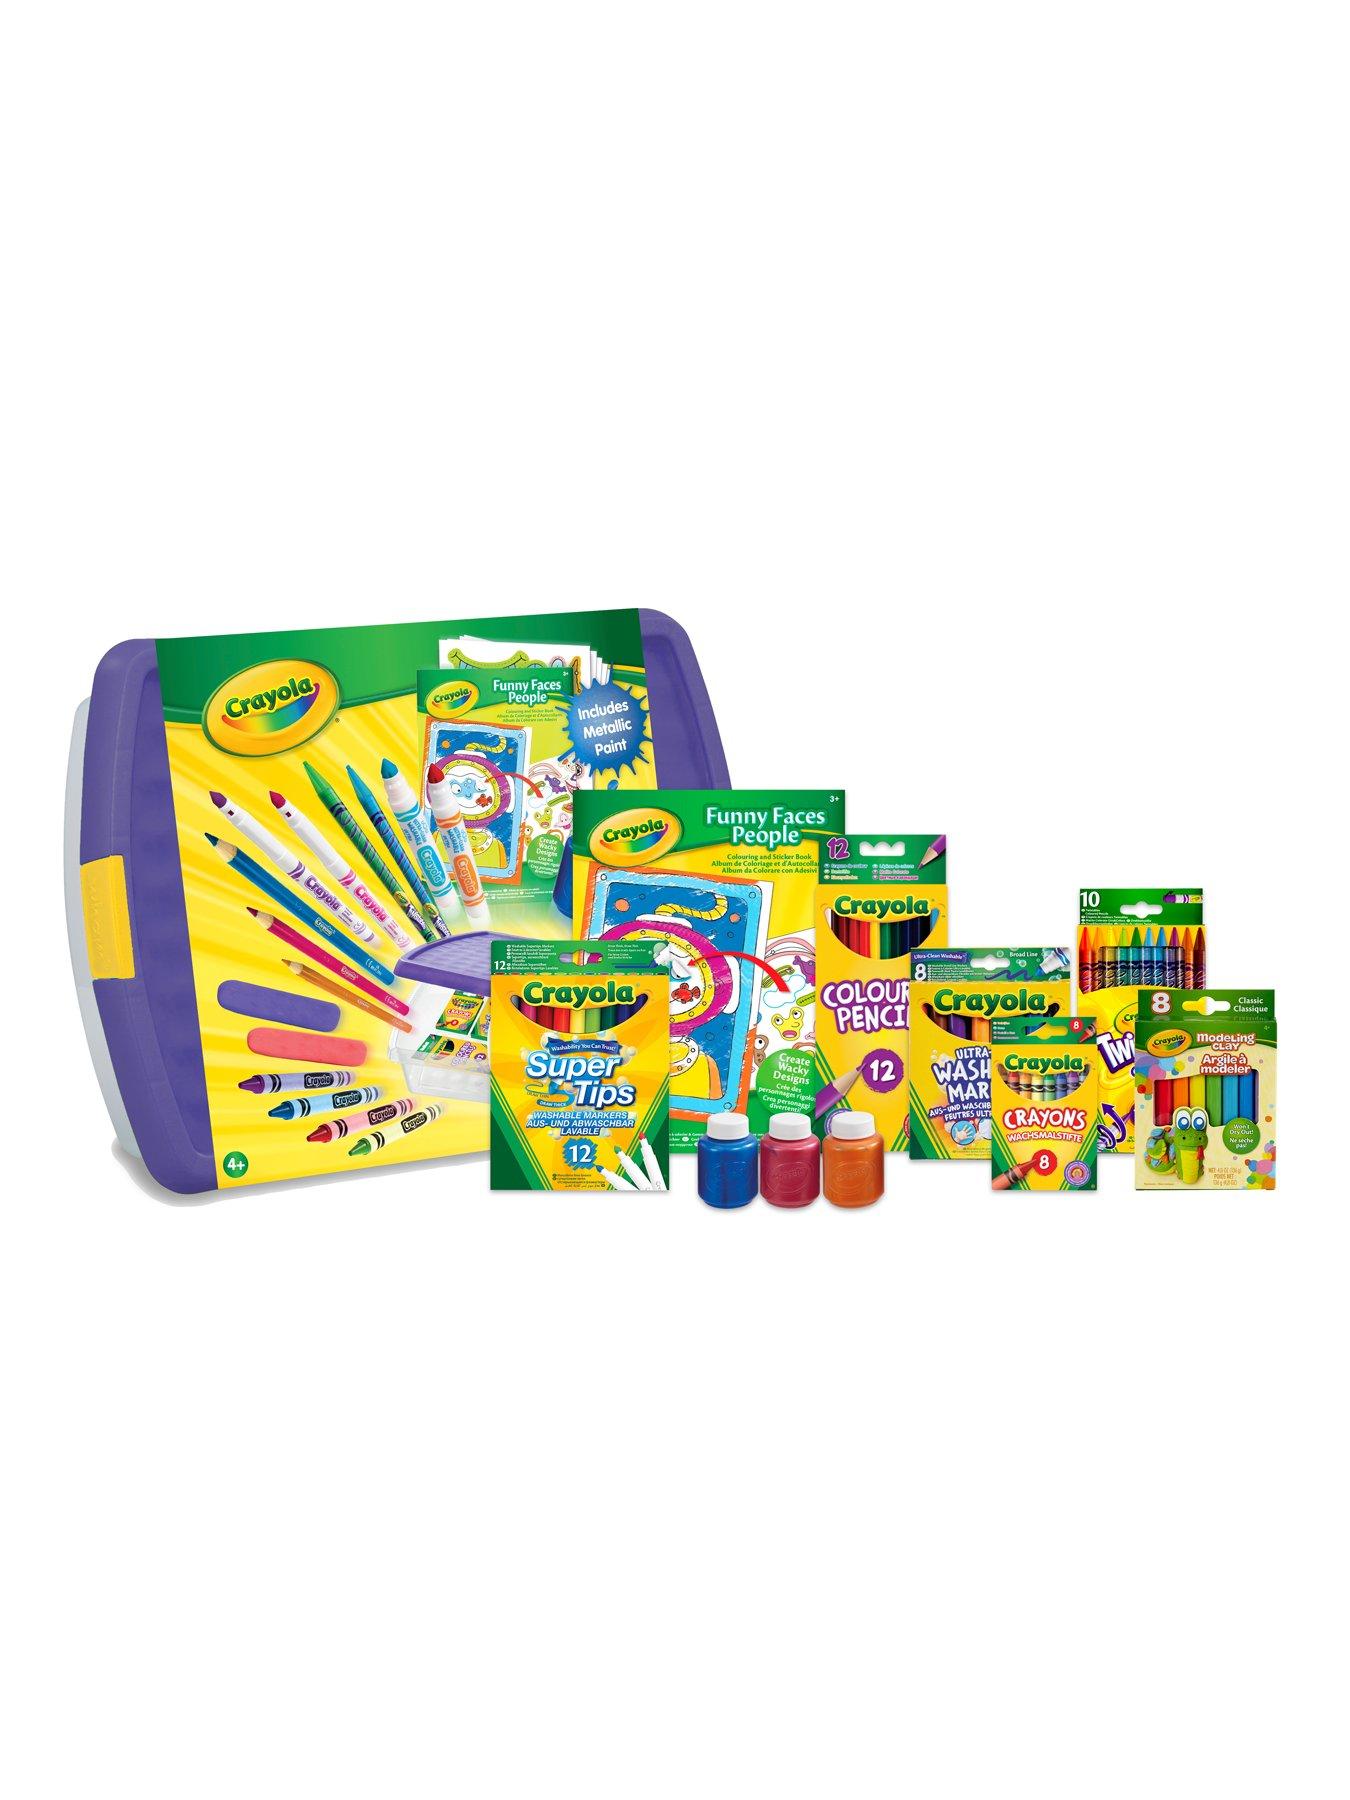 Crayola Bath Set Shower Toys Bundle - 9 PC Crayola Kids Bathroom Set with Crayola Bath Paint, Bath Toys, and Stickers